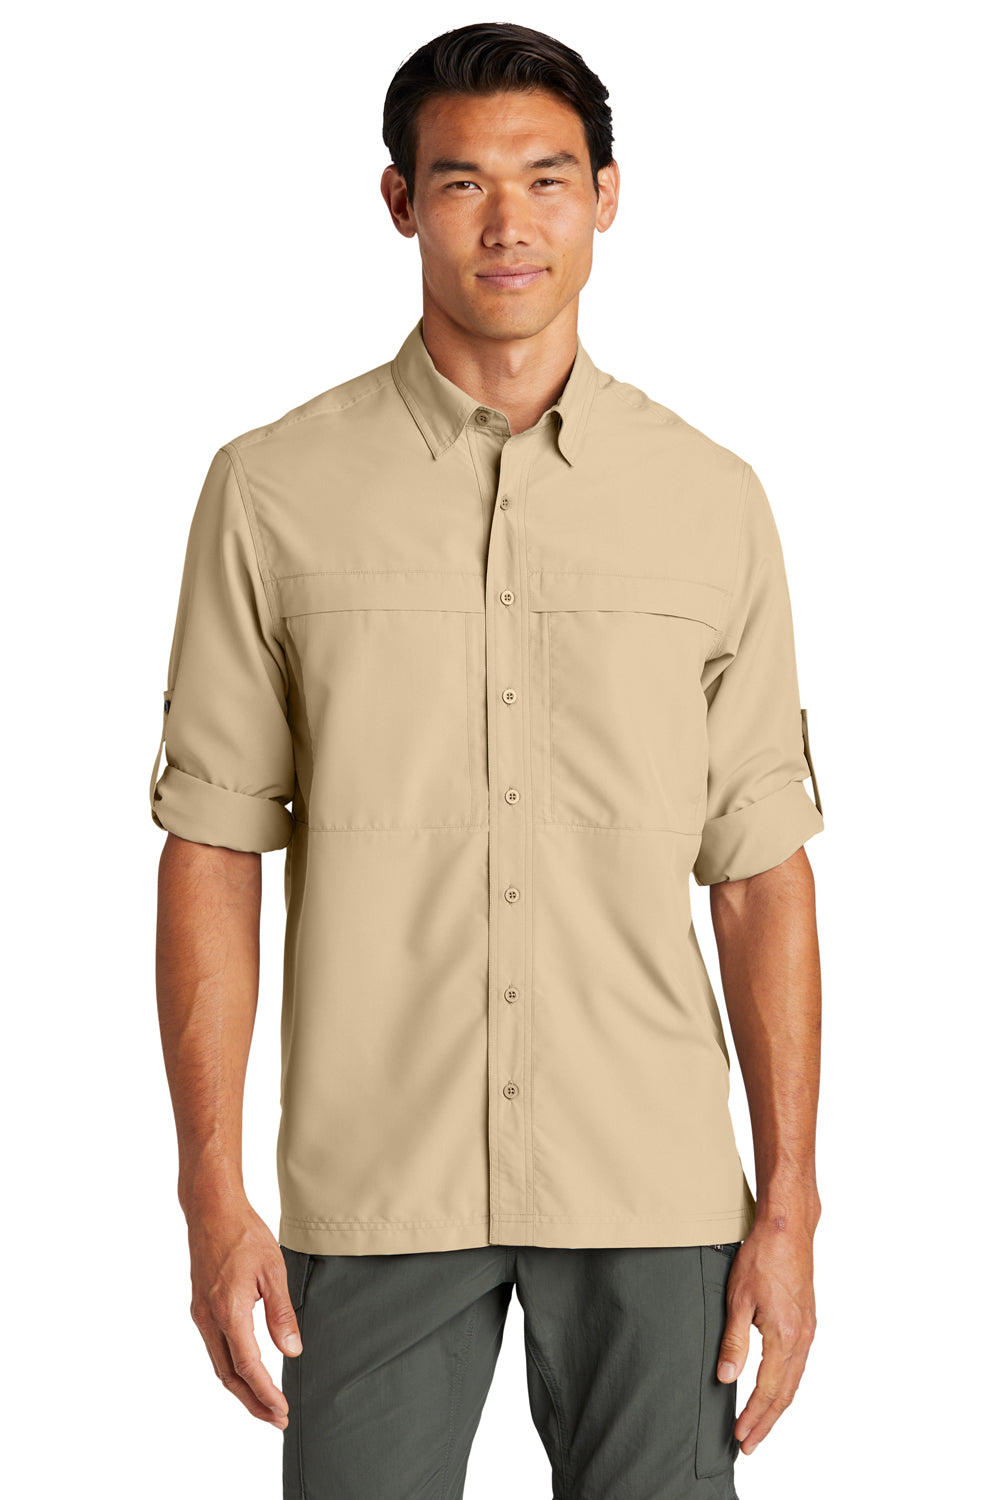 Port Authority W960 UV Daybreak Long Sleeve Button Down Shirt Oat 3Q